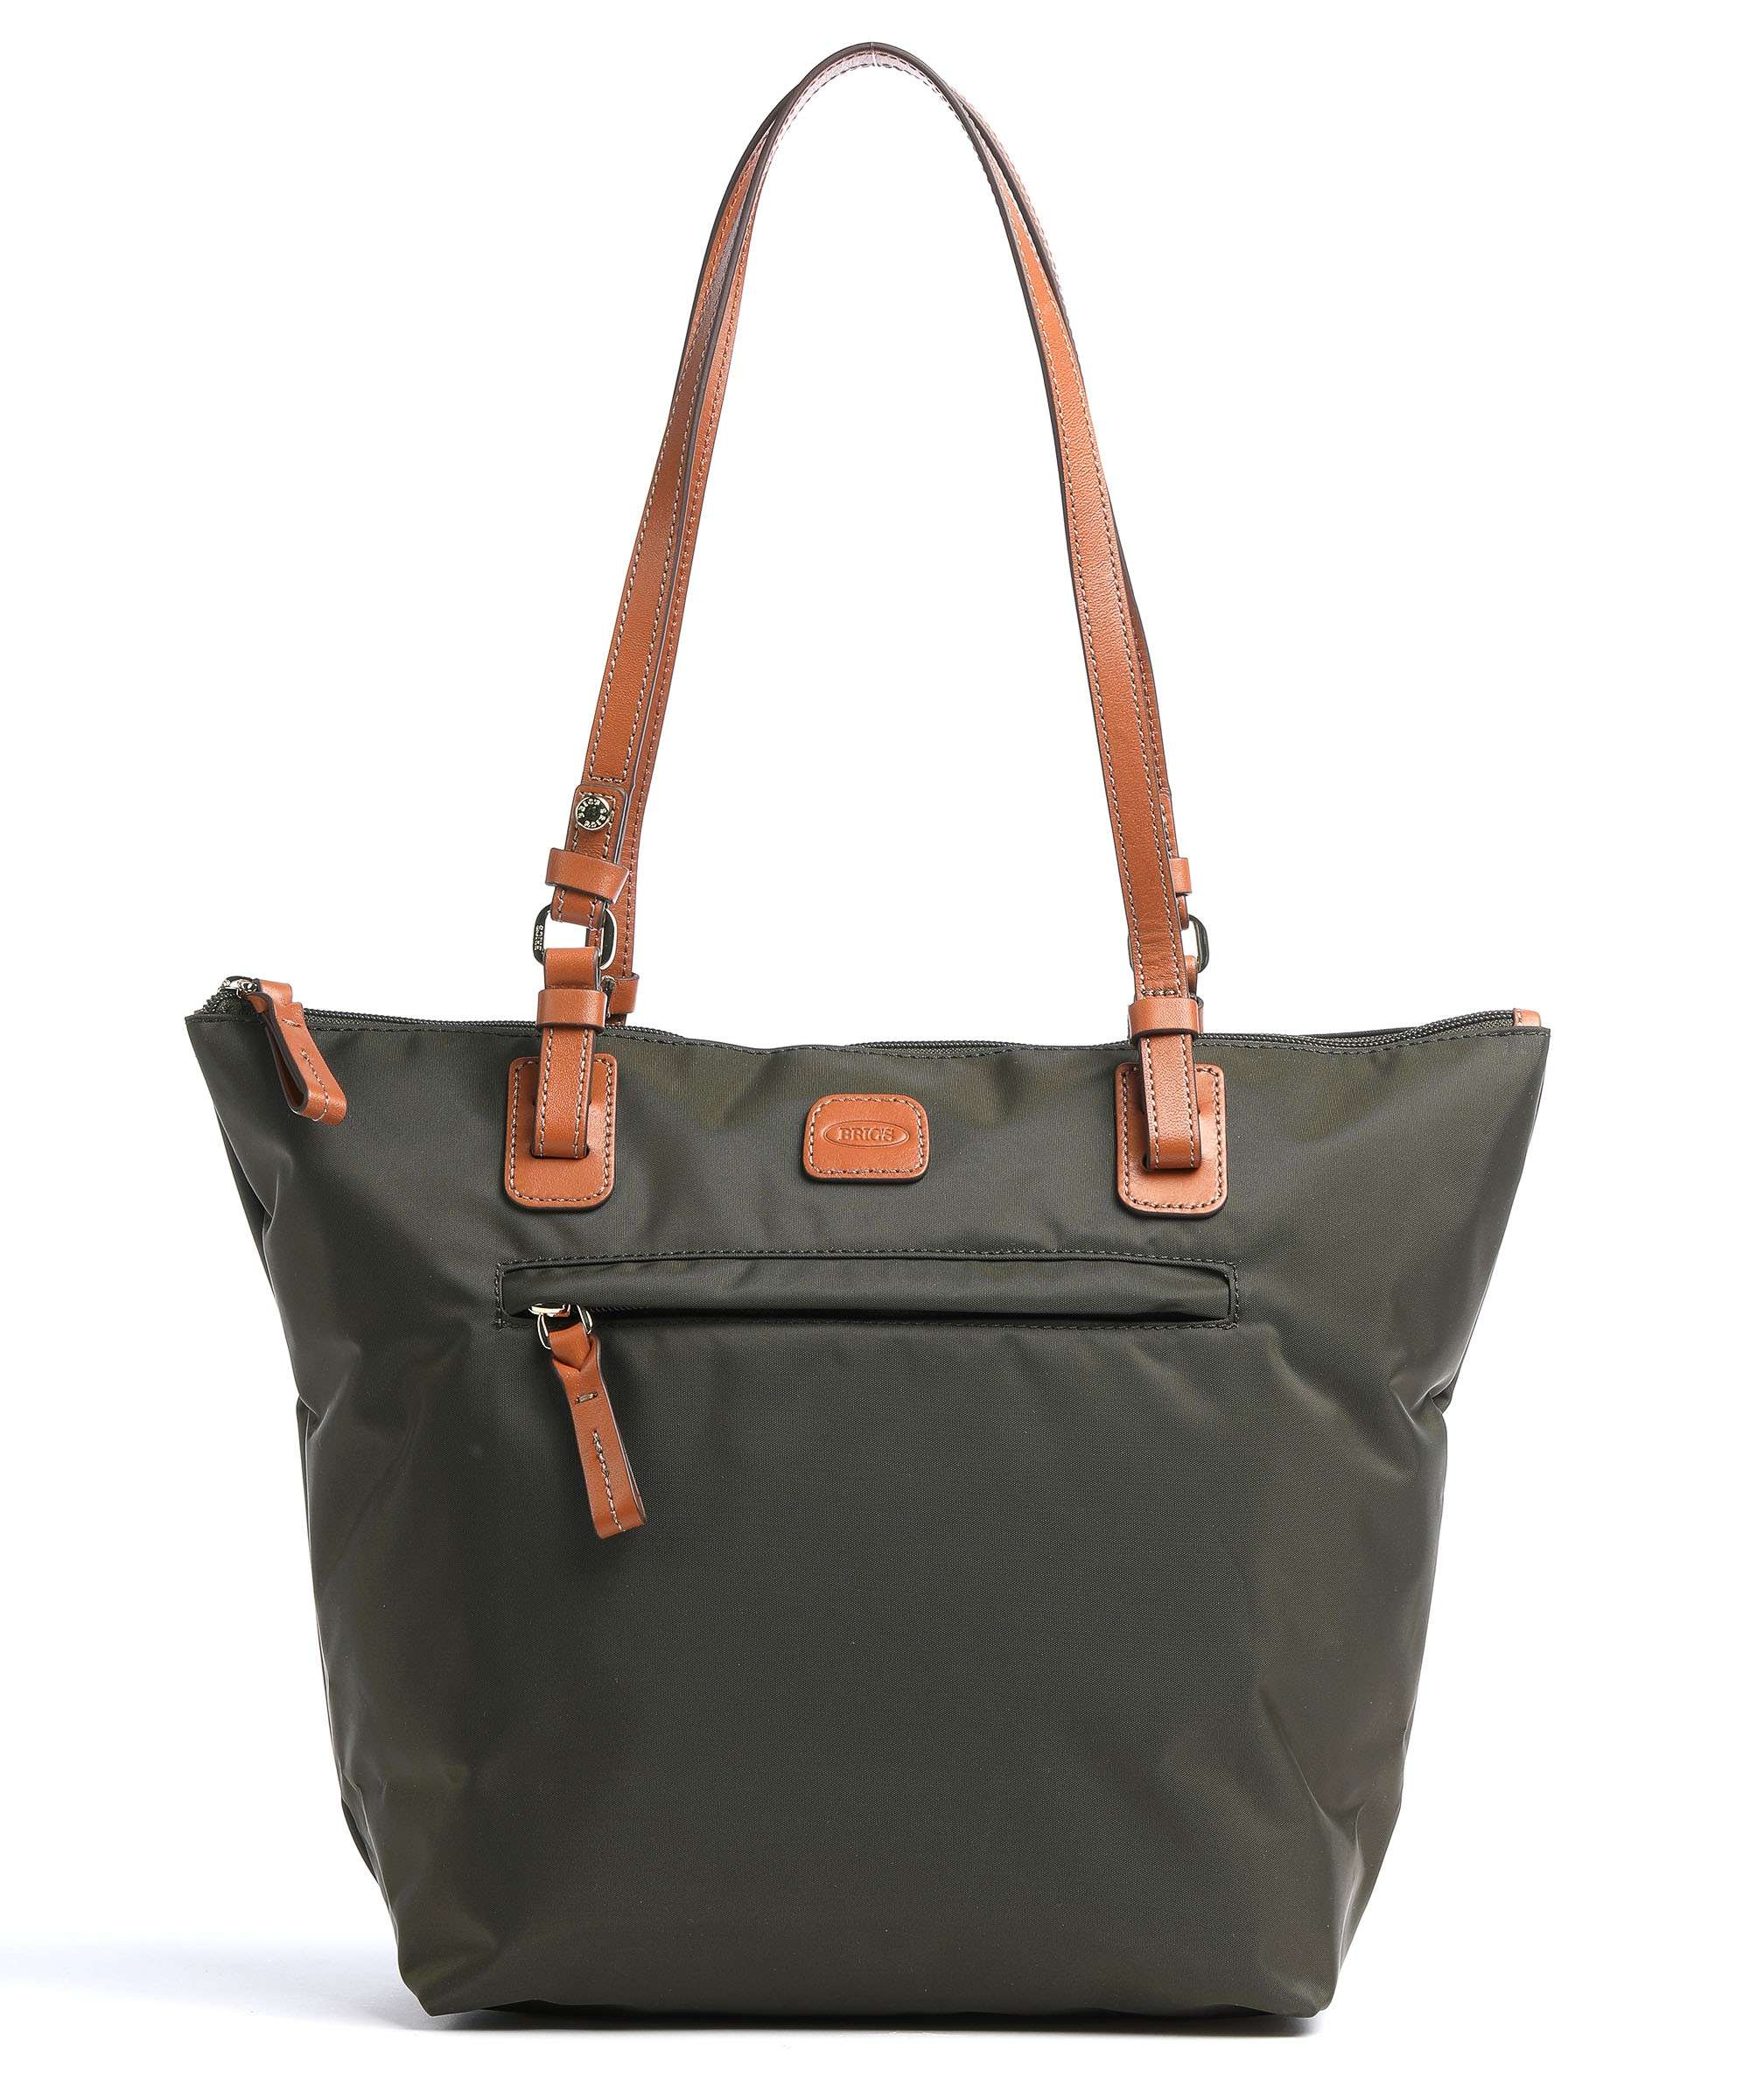 Жіноча текстильна повсякденна сумка Bric's X-Bag BXG45071.078 оливкова